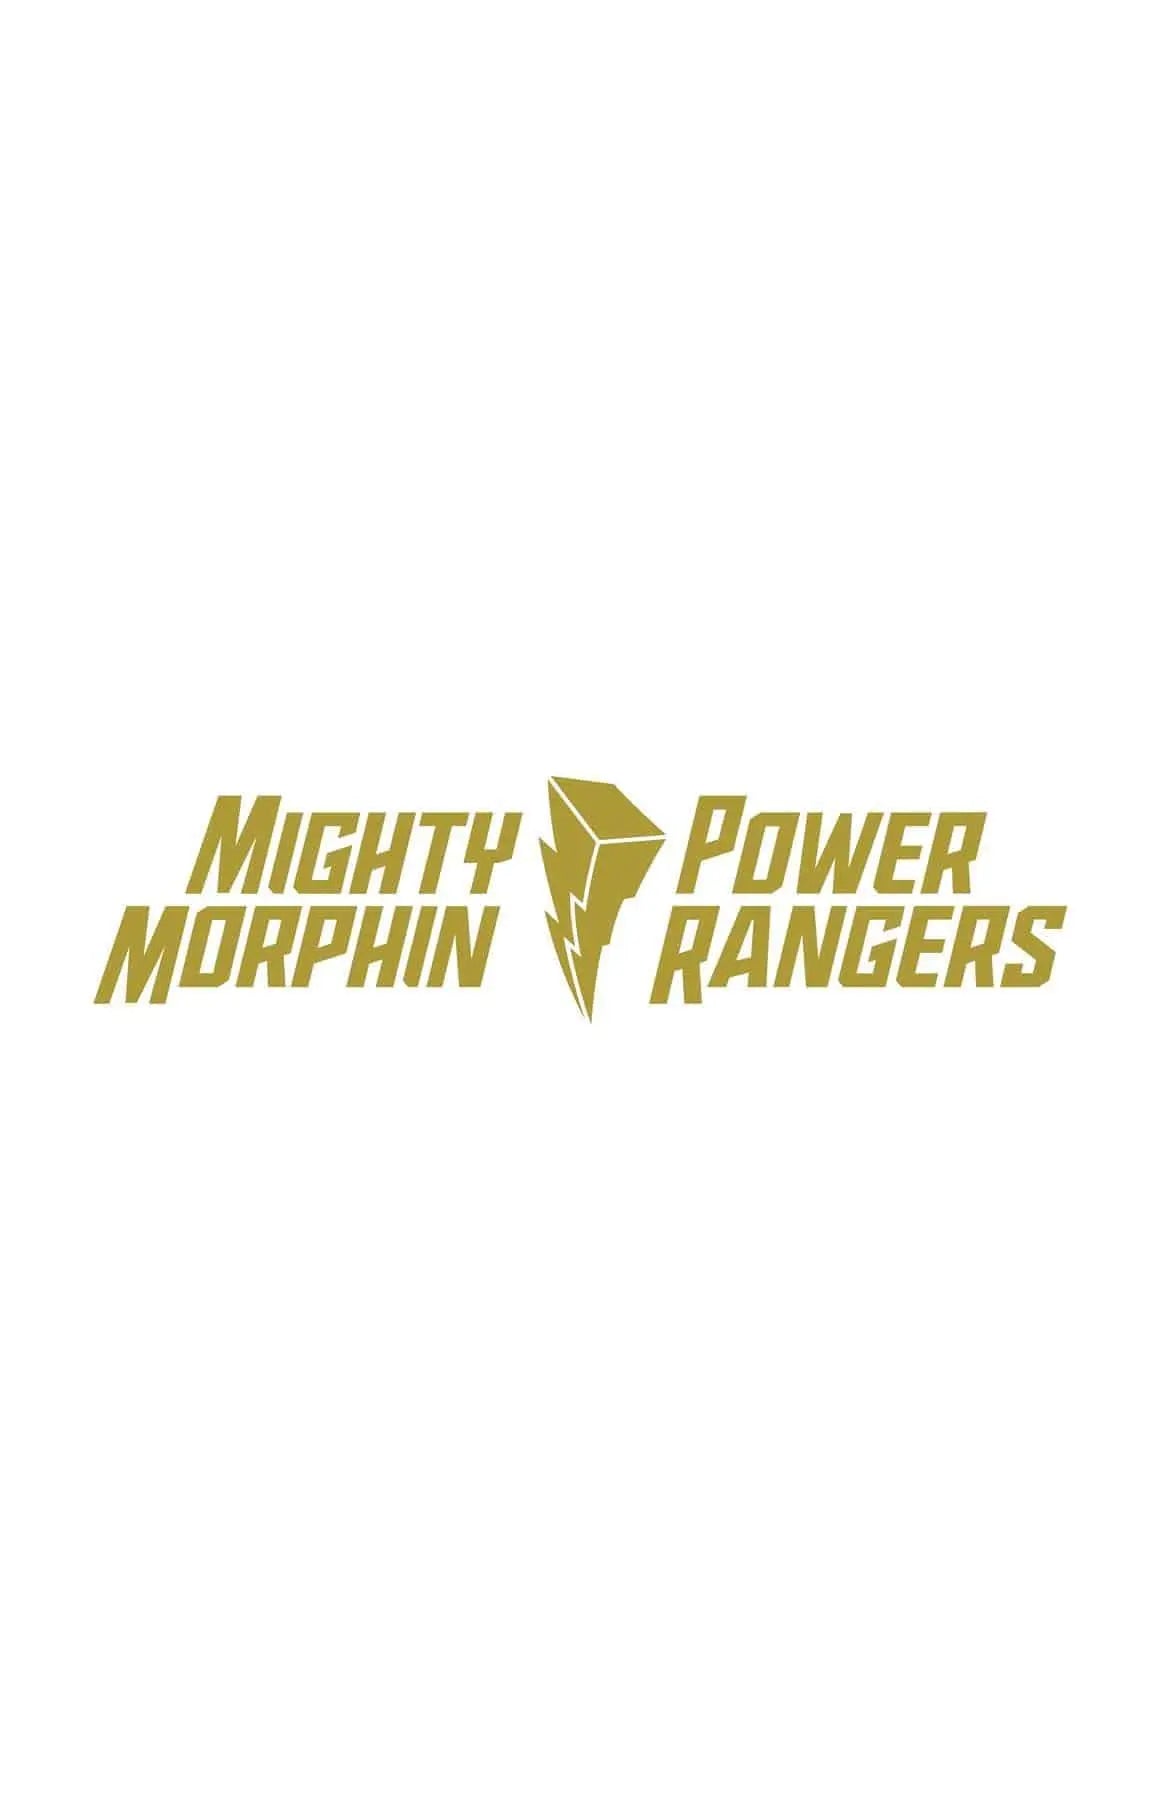 Mighty Morphin / Power Ran #1 LTD ED HC King Gaming